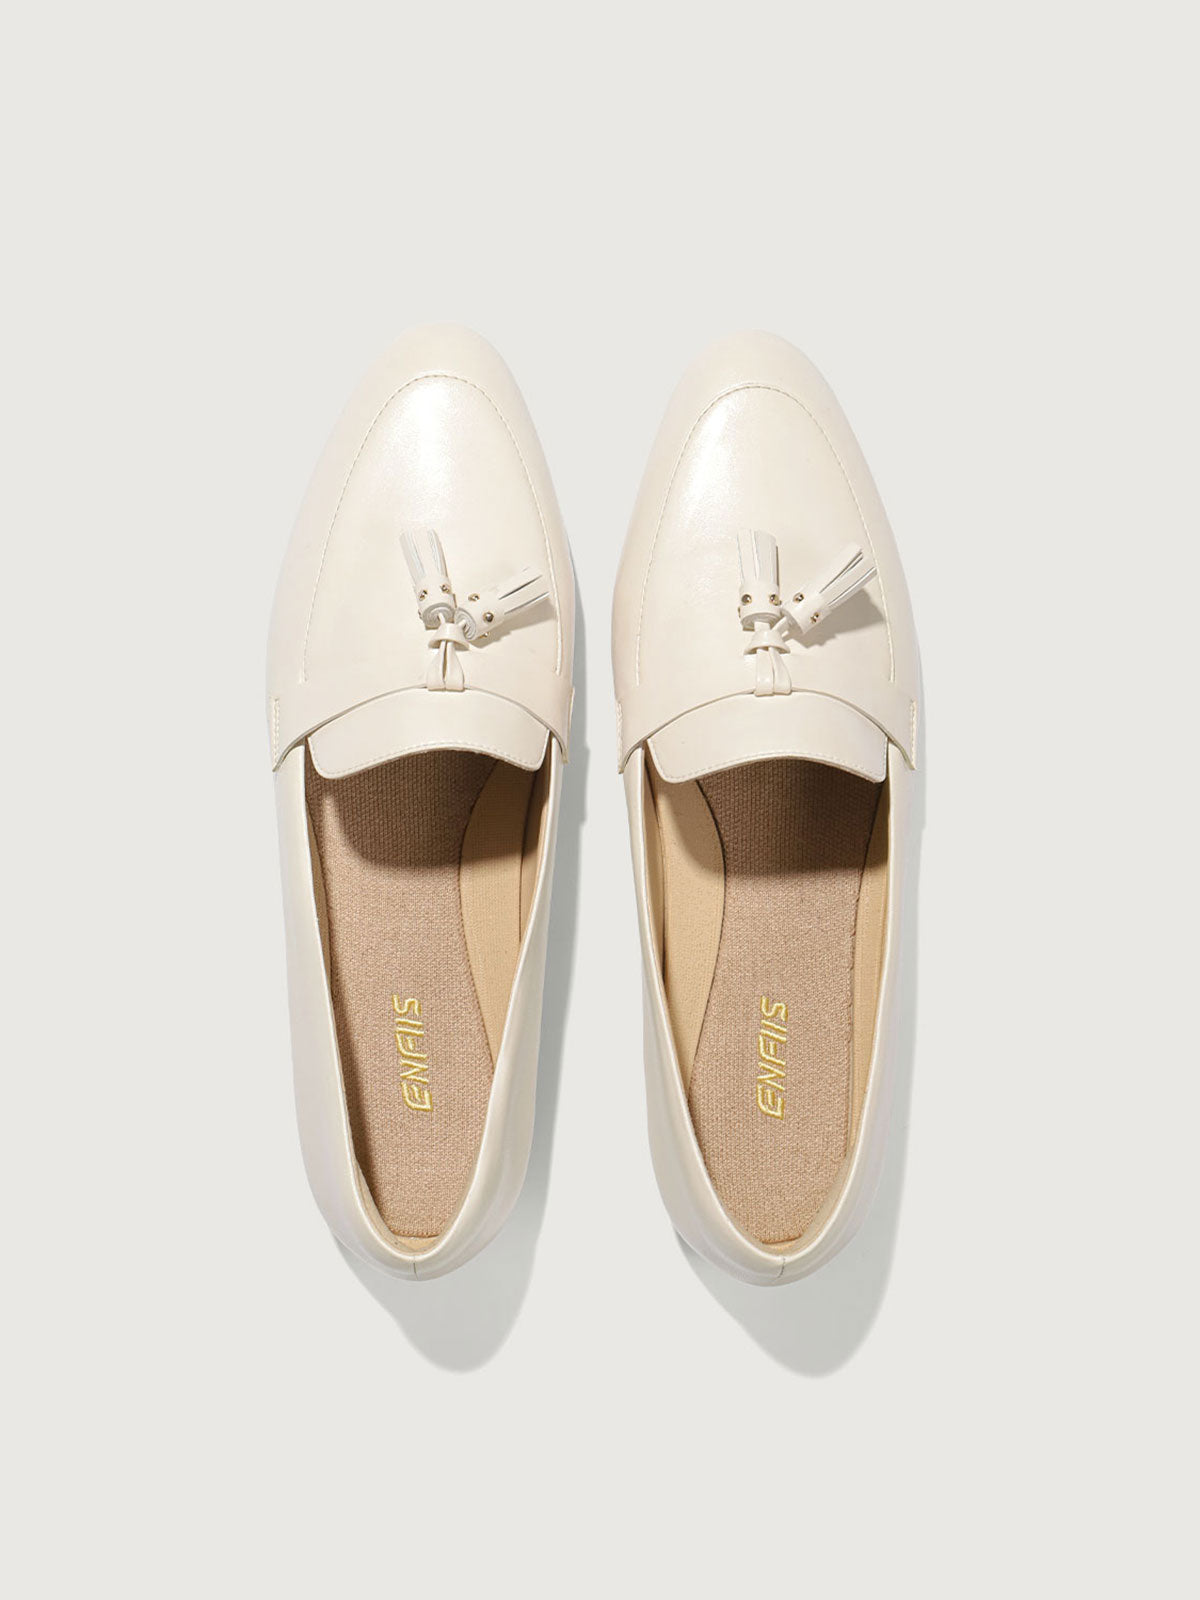 Off-white lamb pattern microfiber tassel loafer shoes. Flats - ENFIIS